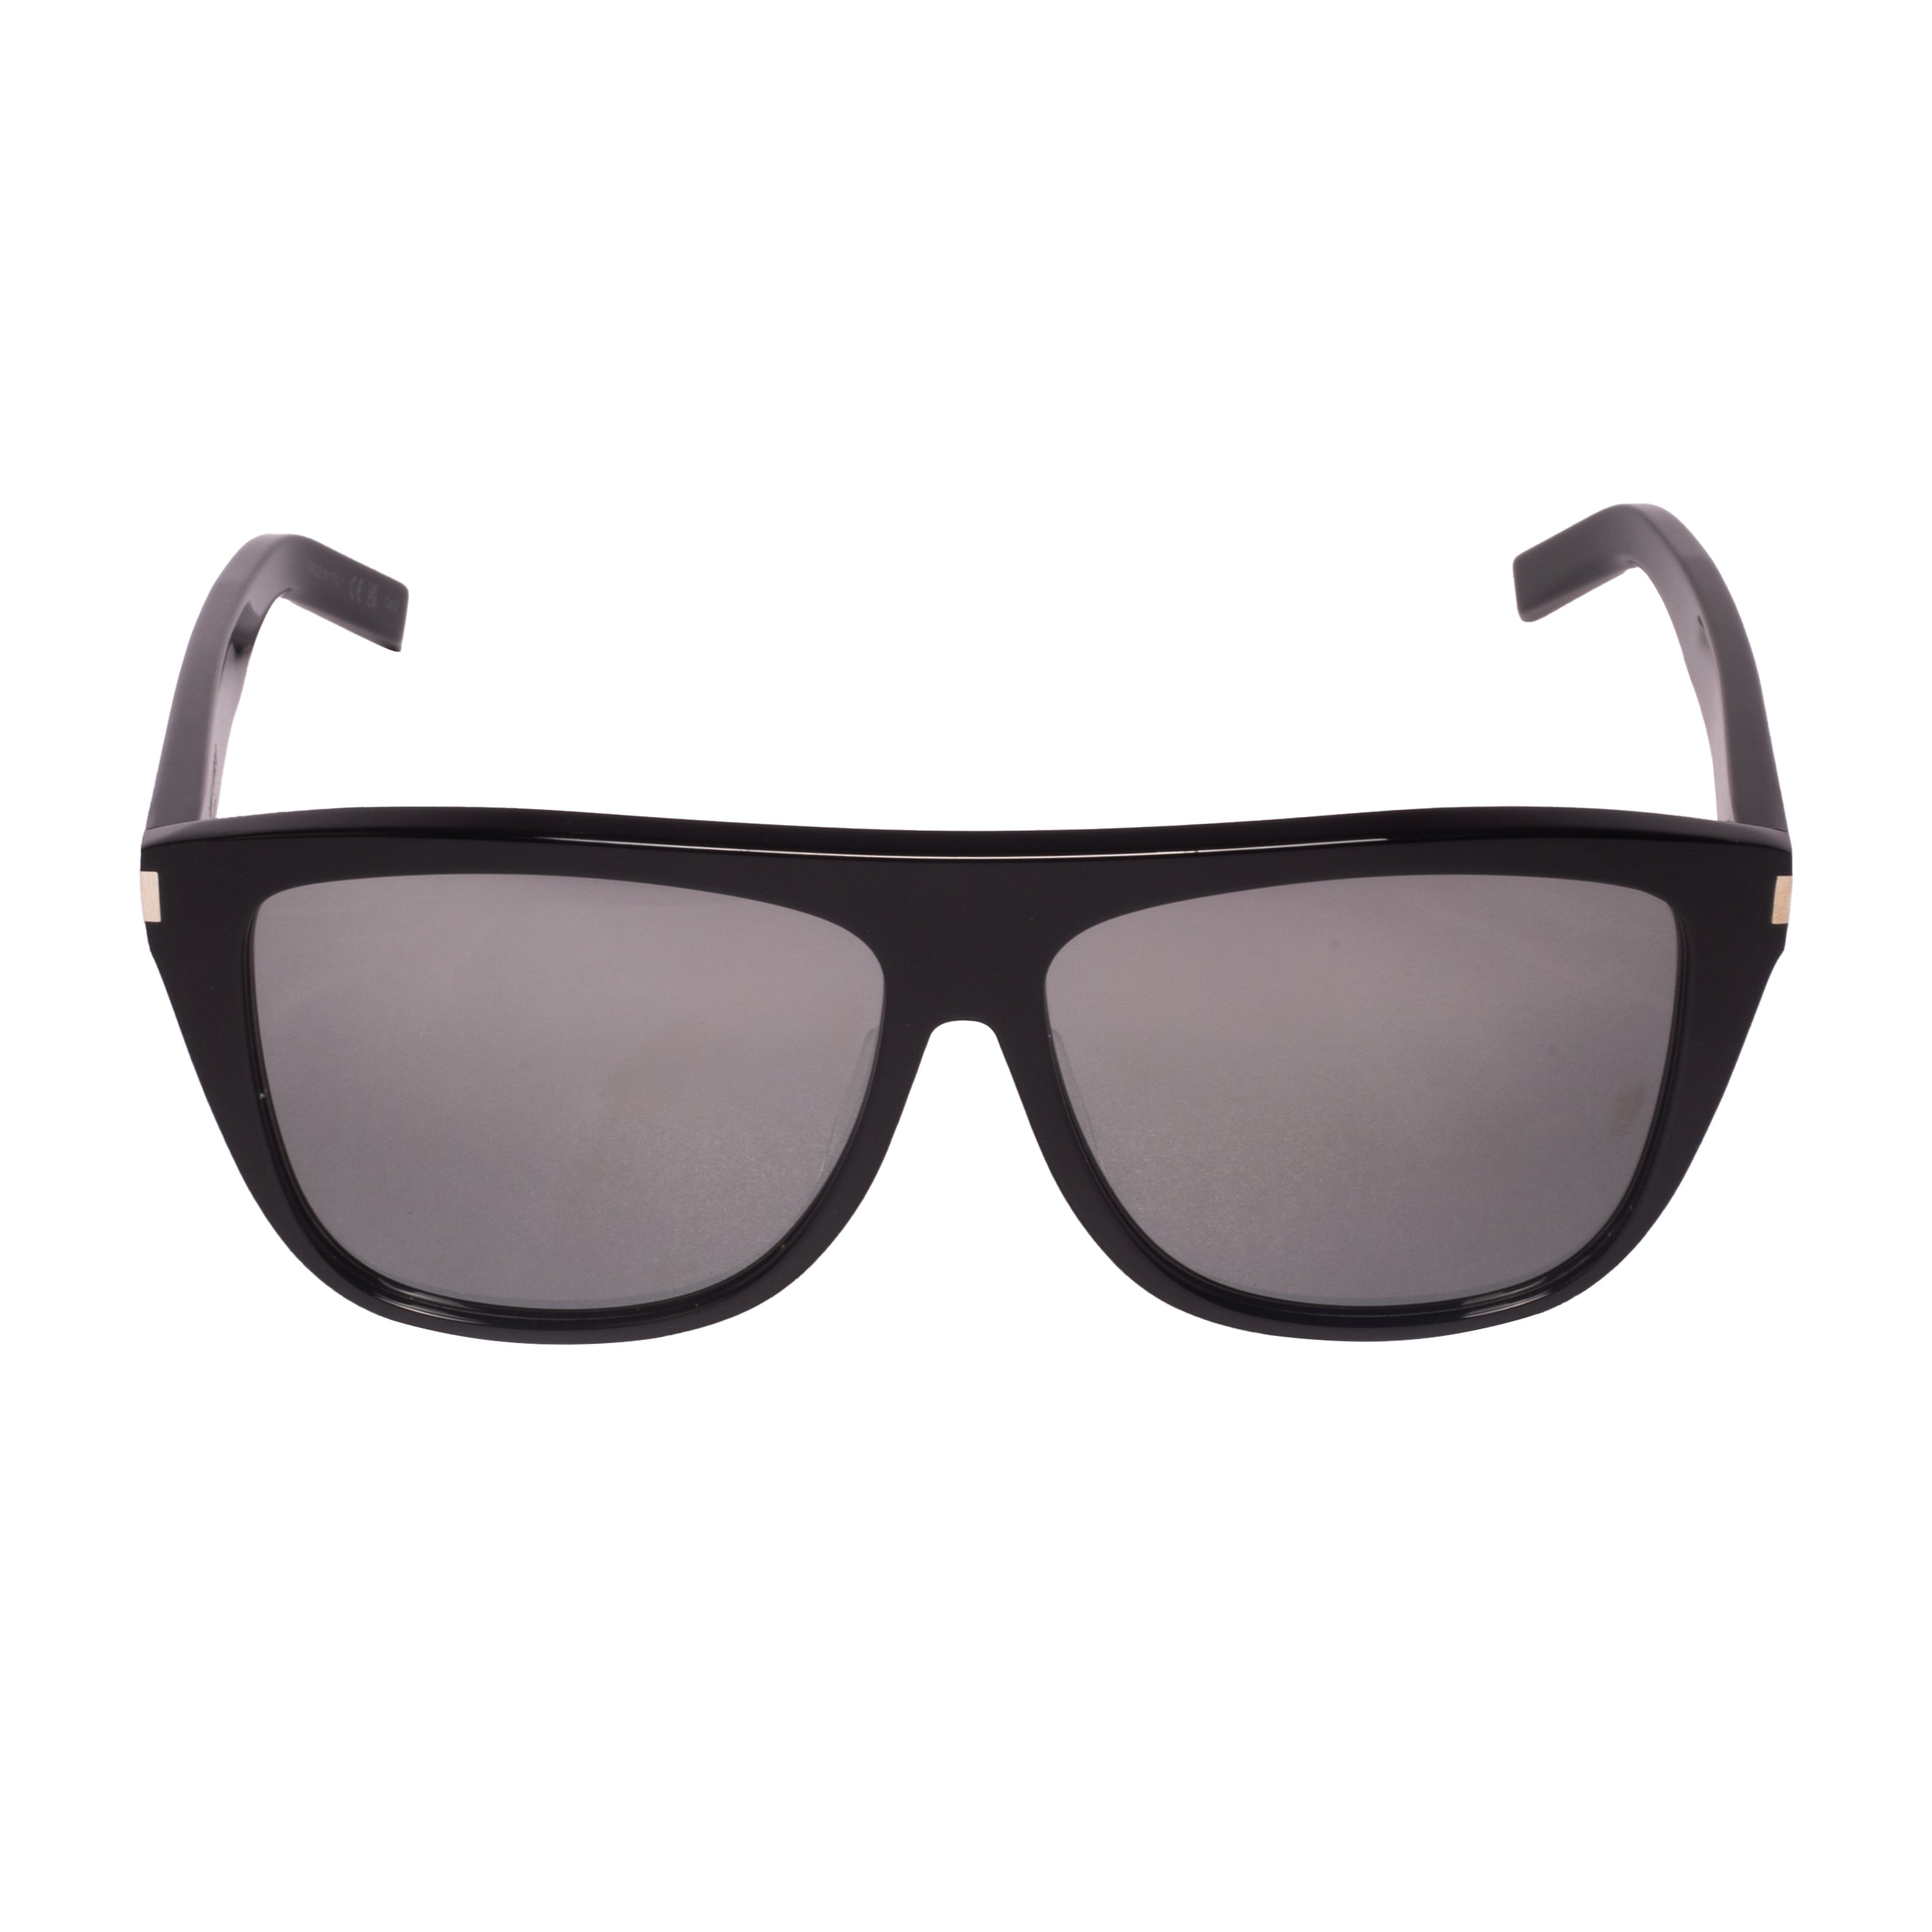 Saint Laurent-SL 1-59-001 Sunglasses - Premium Sunglasses from Saint Laurent - Just Rs. 23300! Shop now at Laxmi Opticians